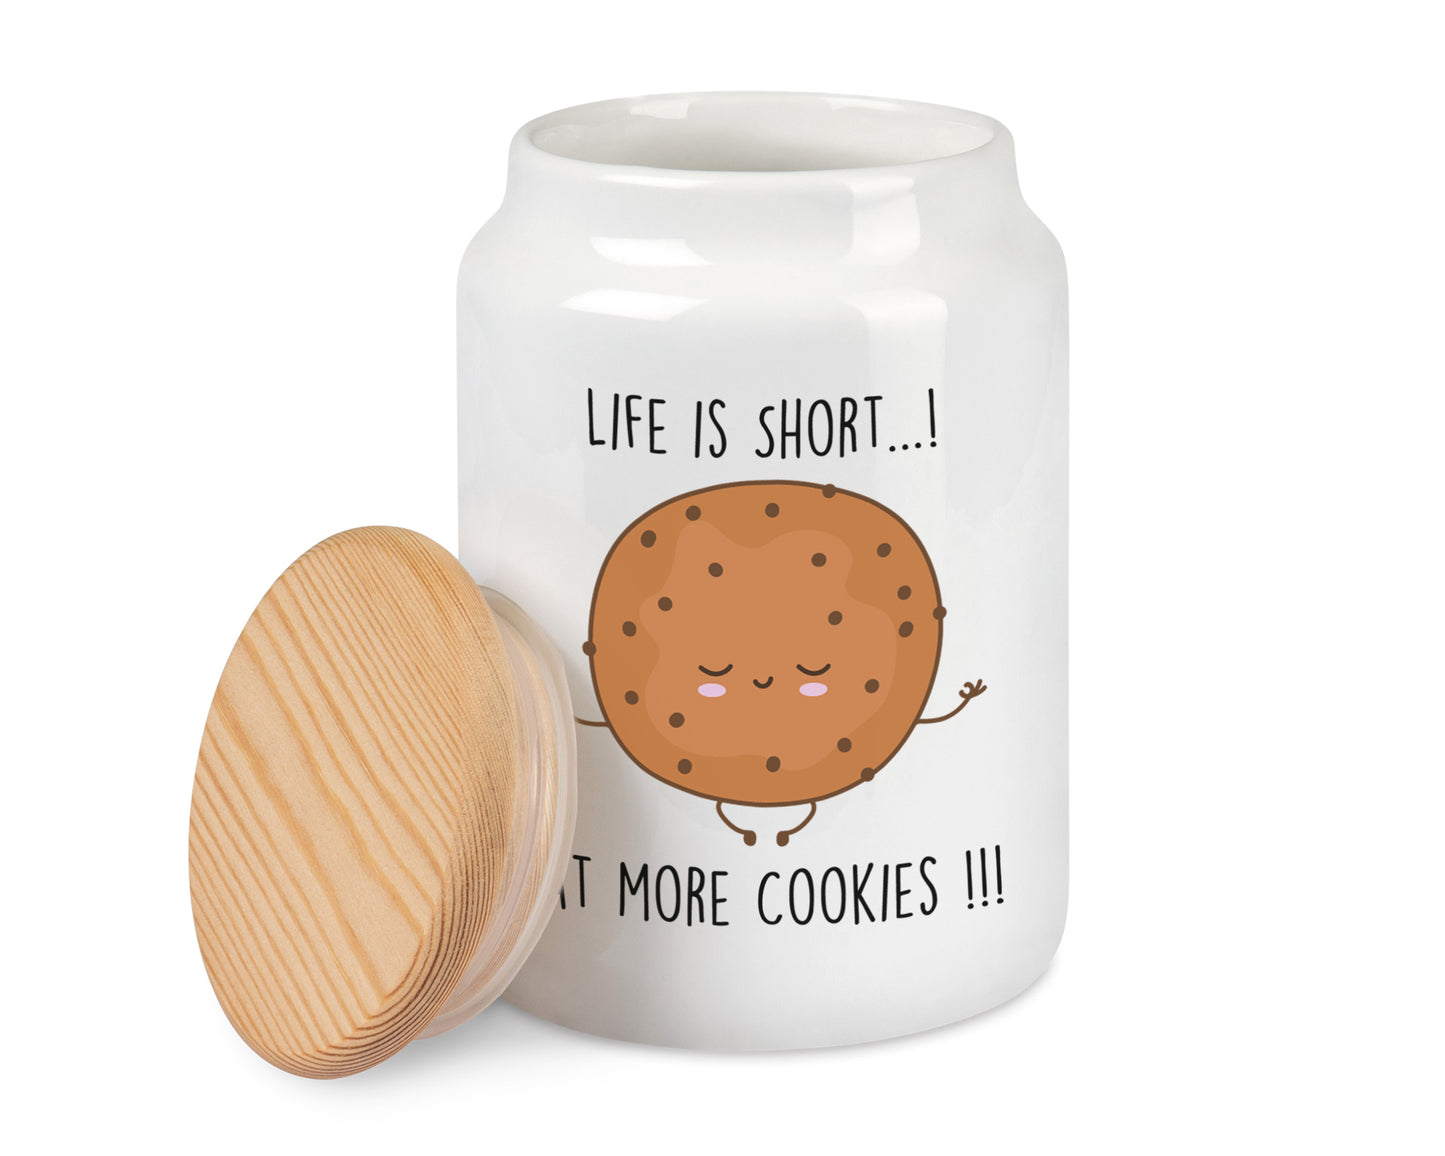 Keksdose mit Spruch Life is short - eat more cookies Plätzchendose